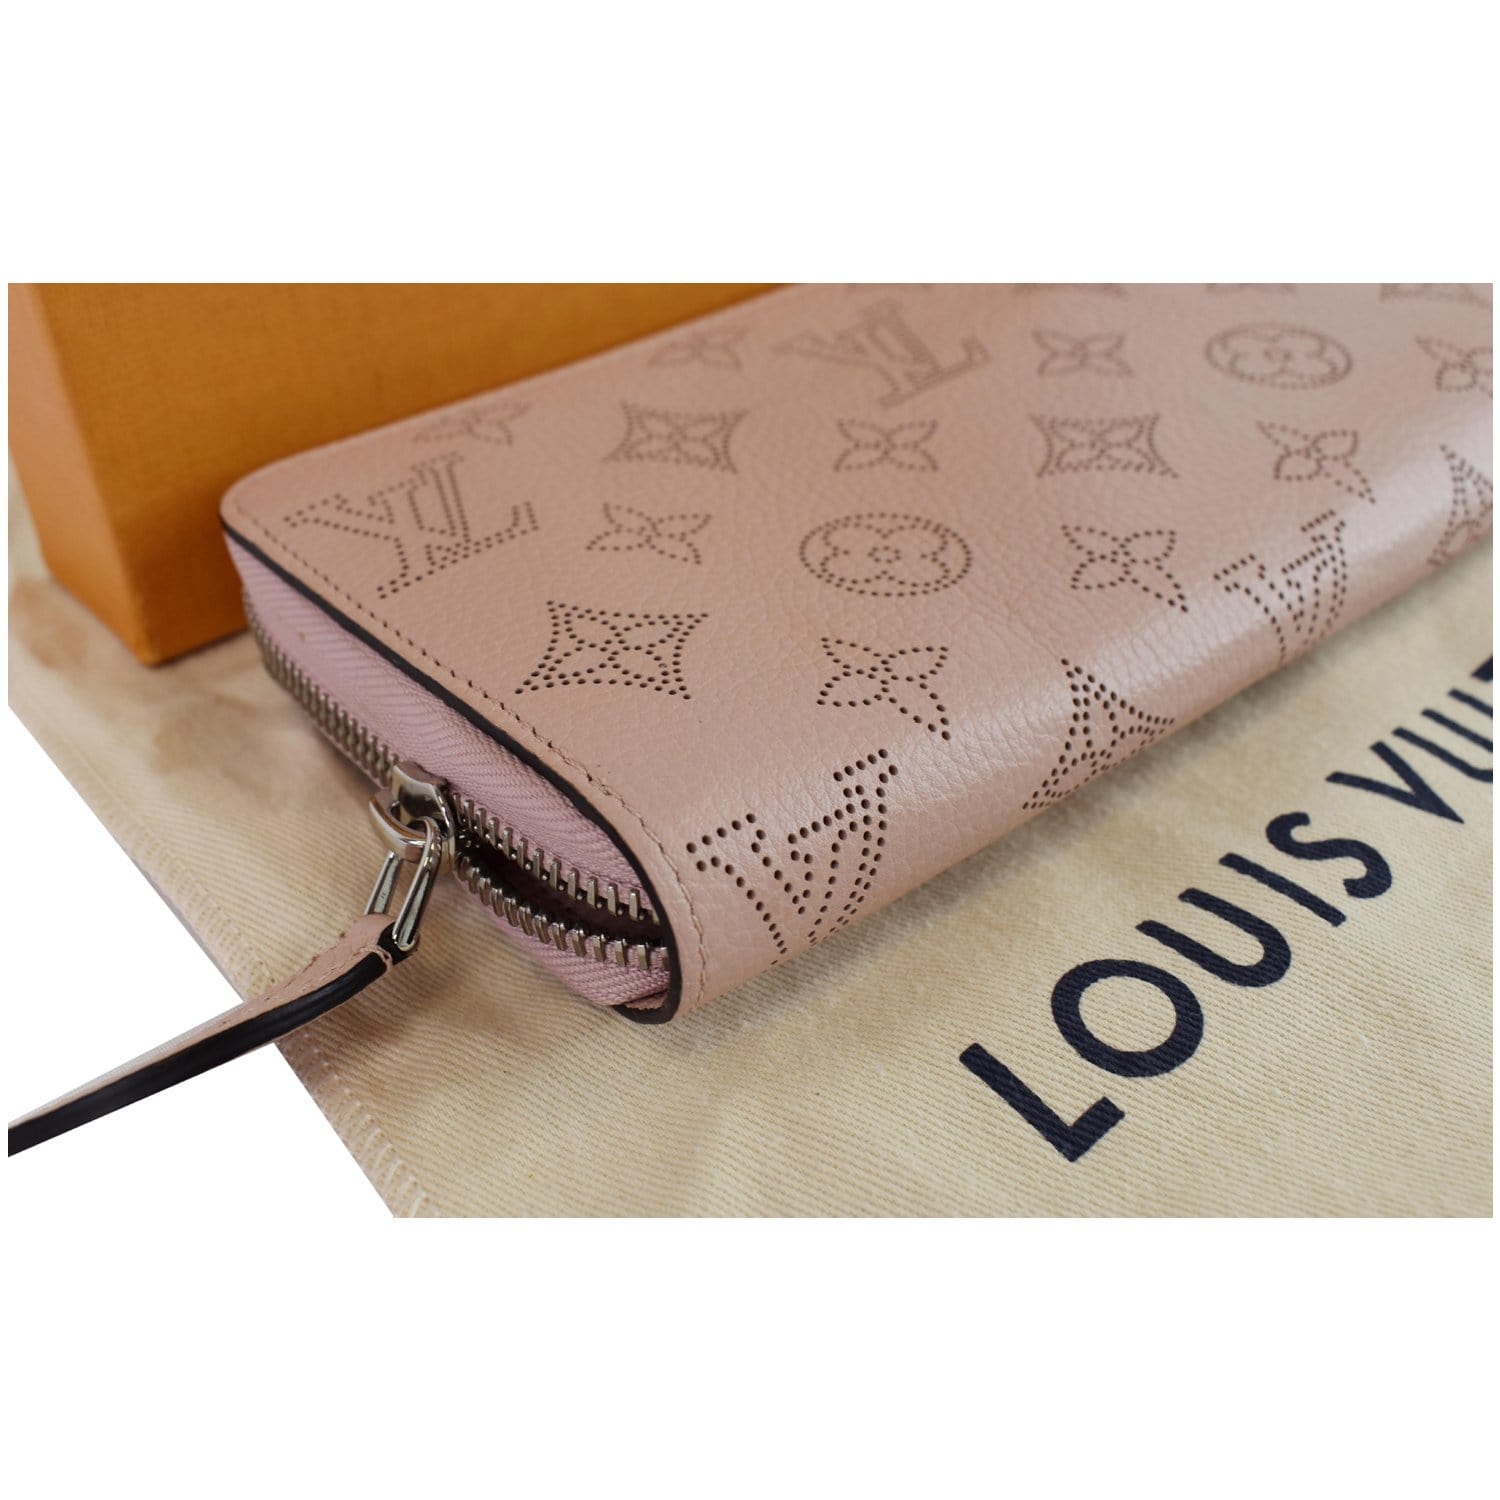 Louis Vuitton Mahina Leather Wallet